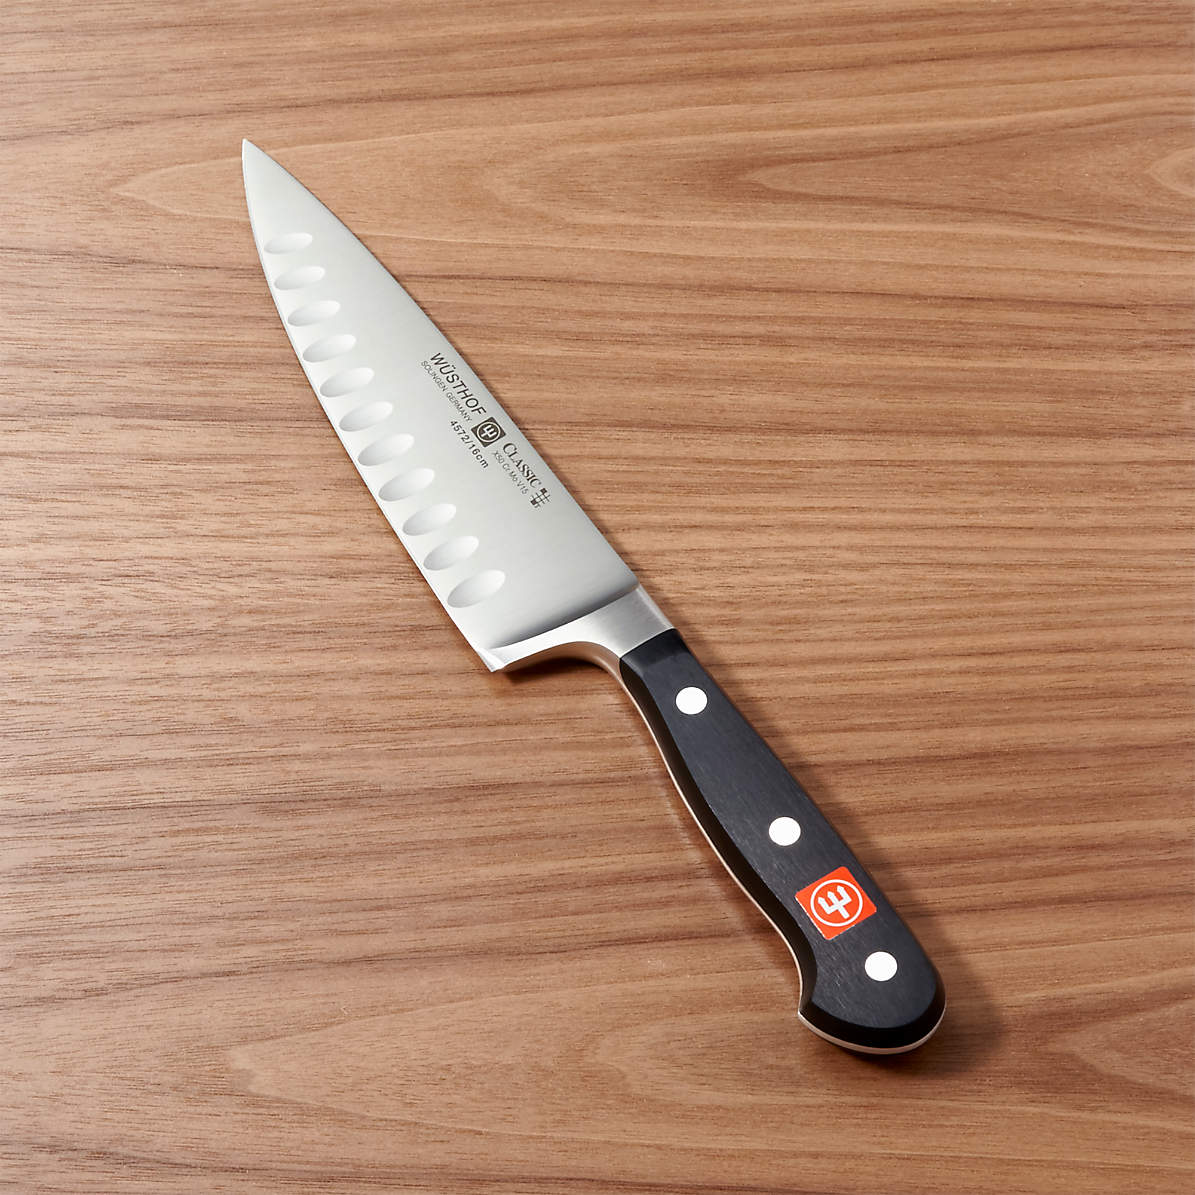 wusthof kitchen knives